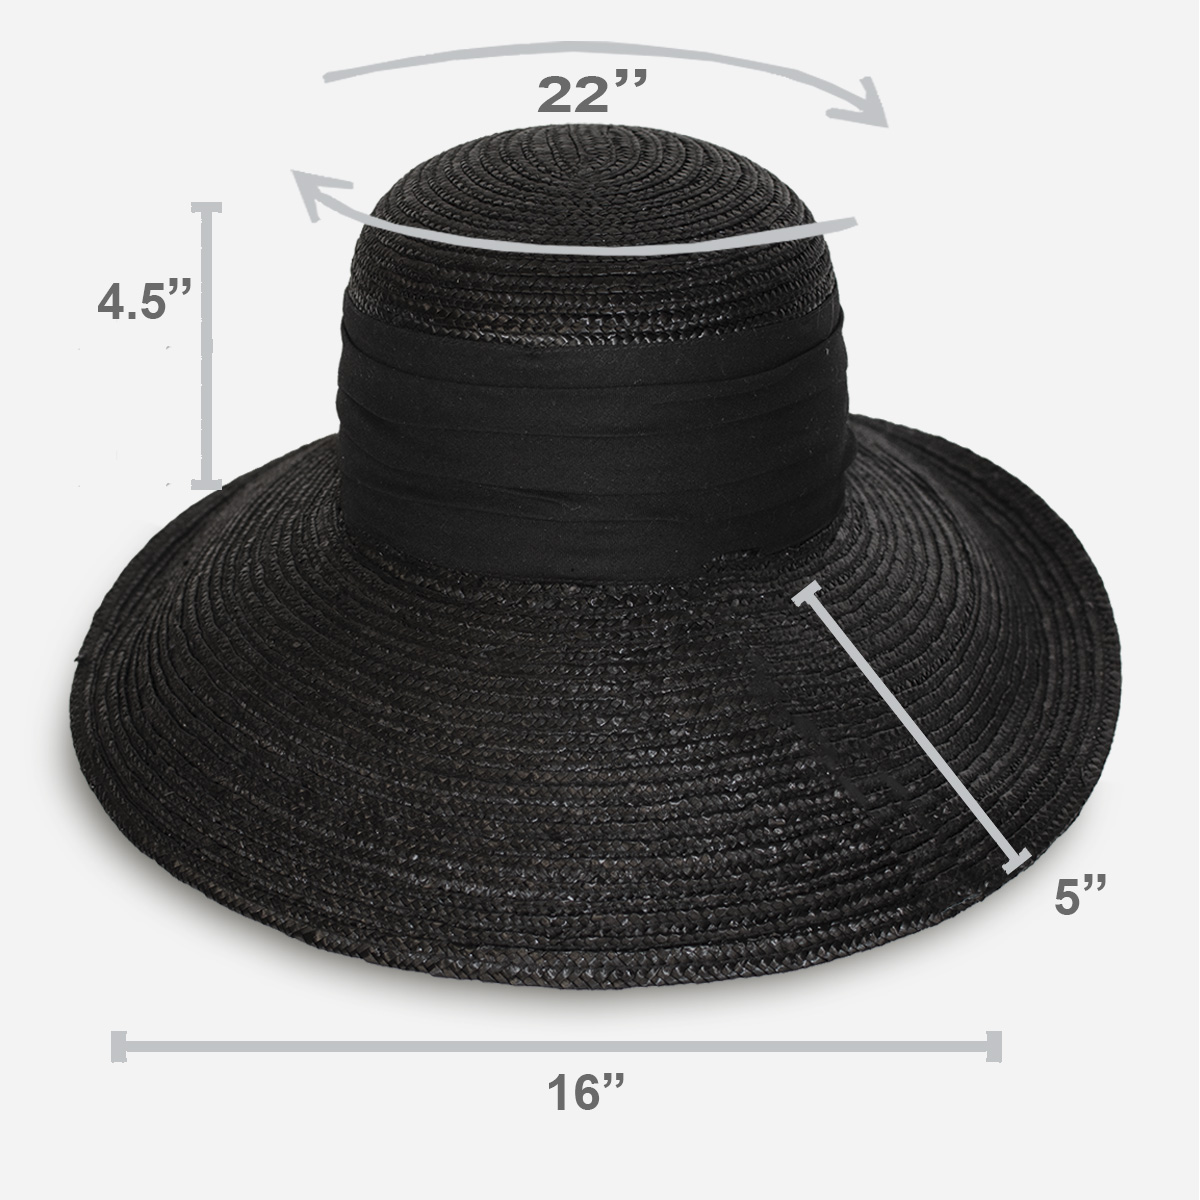 Black straw hat size 22